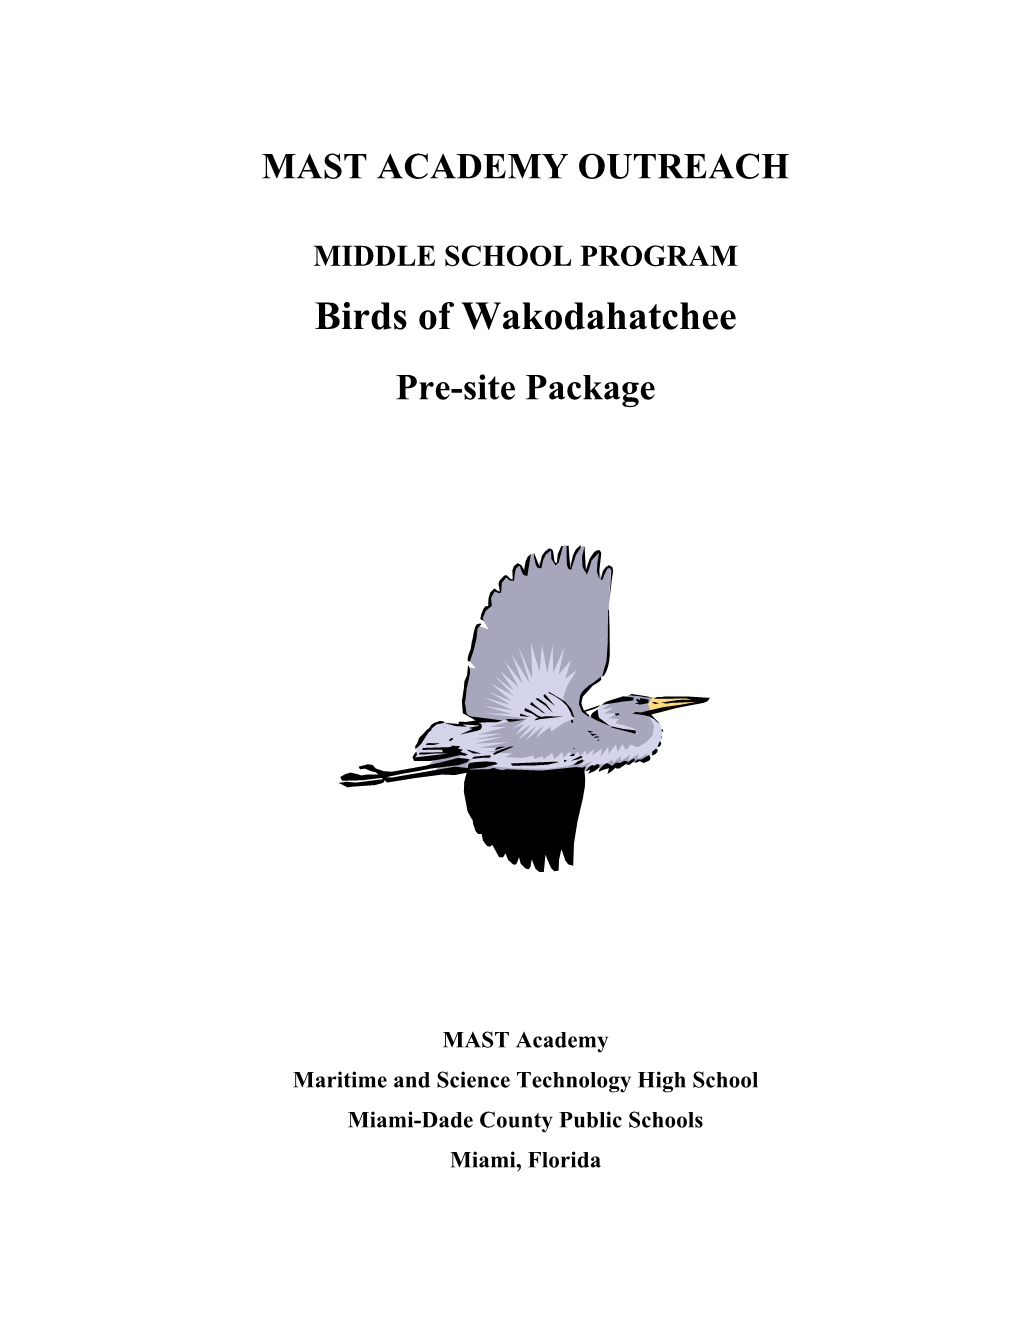 The Birds of Wakodahatchee Wetlands 4